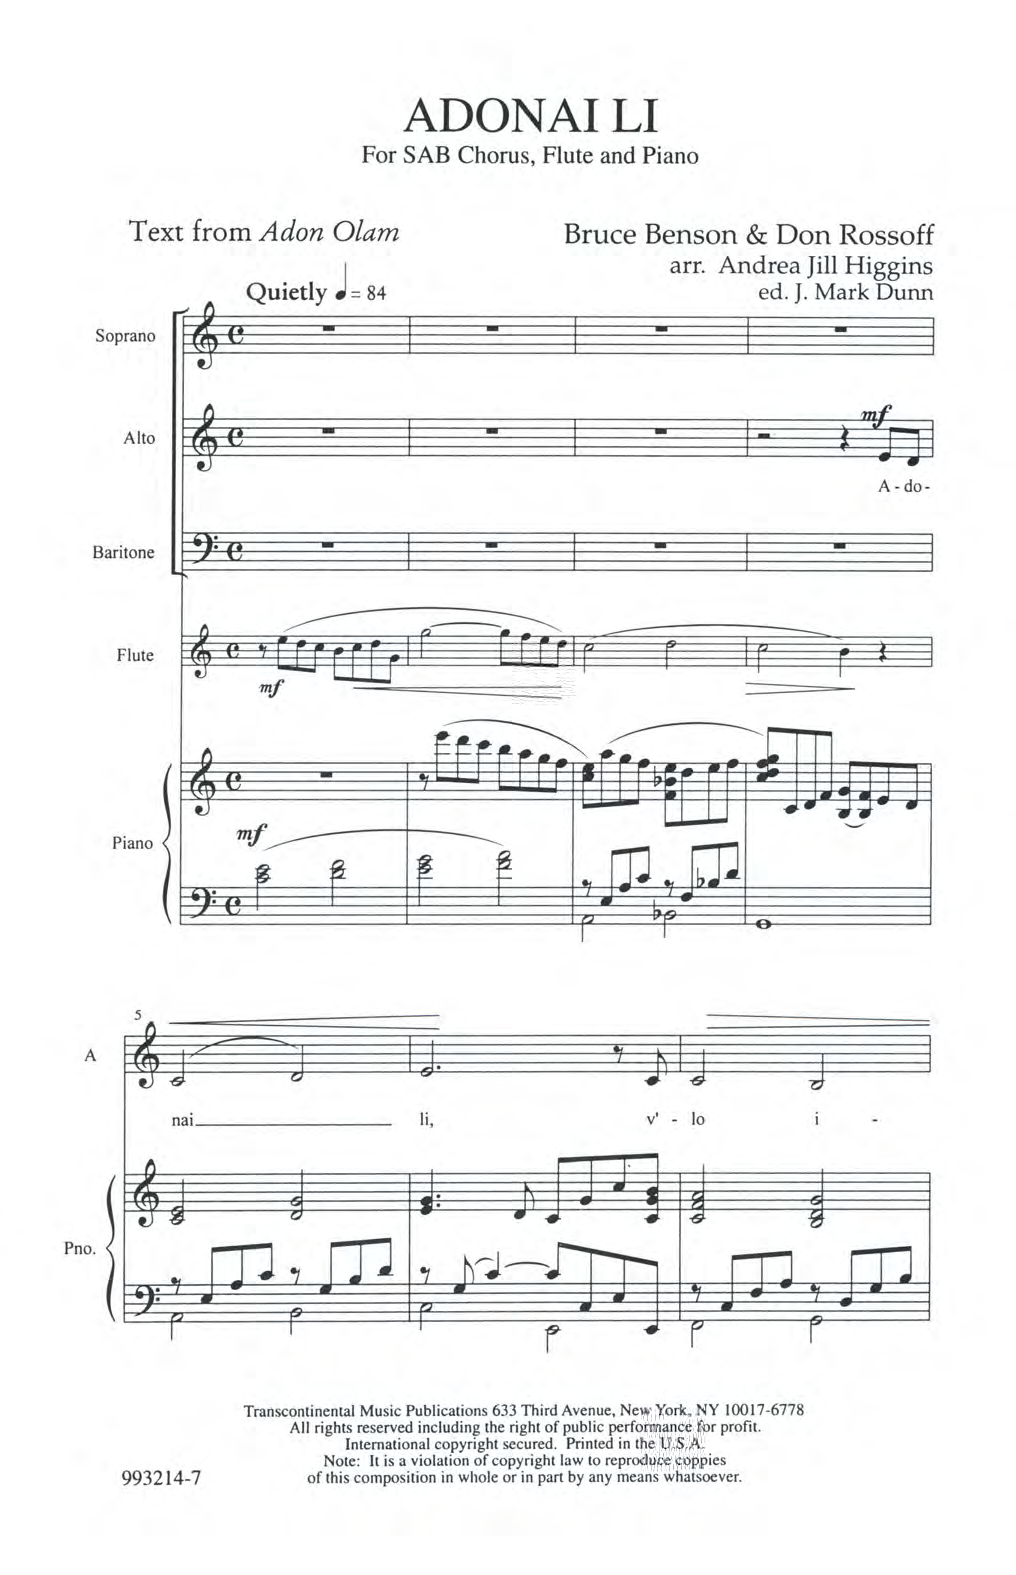 Download Andrea Jill Higgins Adonai Li Sheet Music and learn how to play SAB Choir PDF digital score in minutes